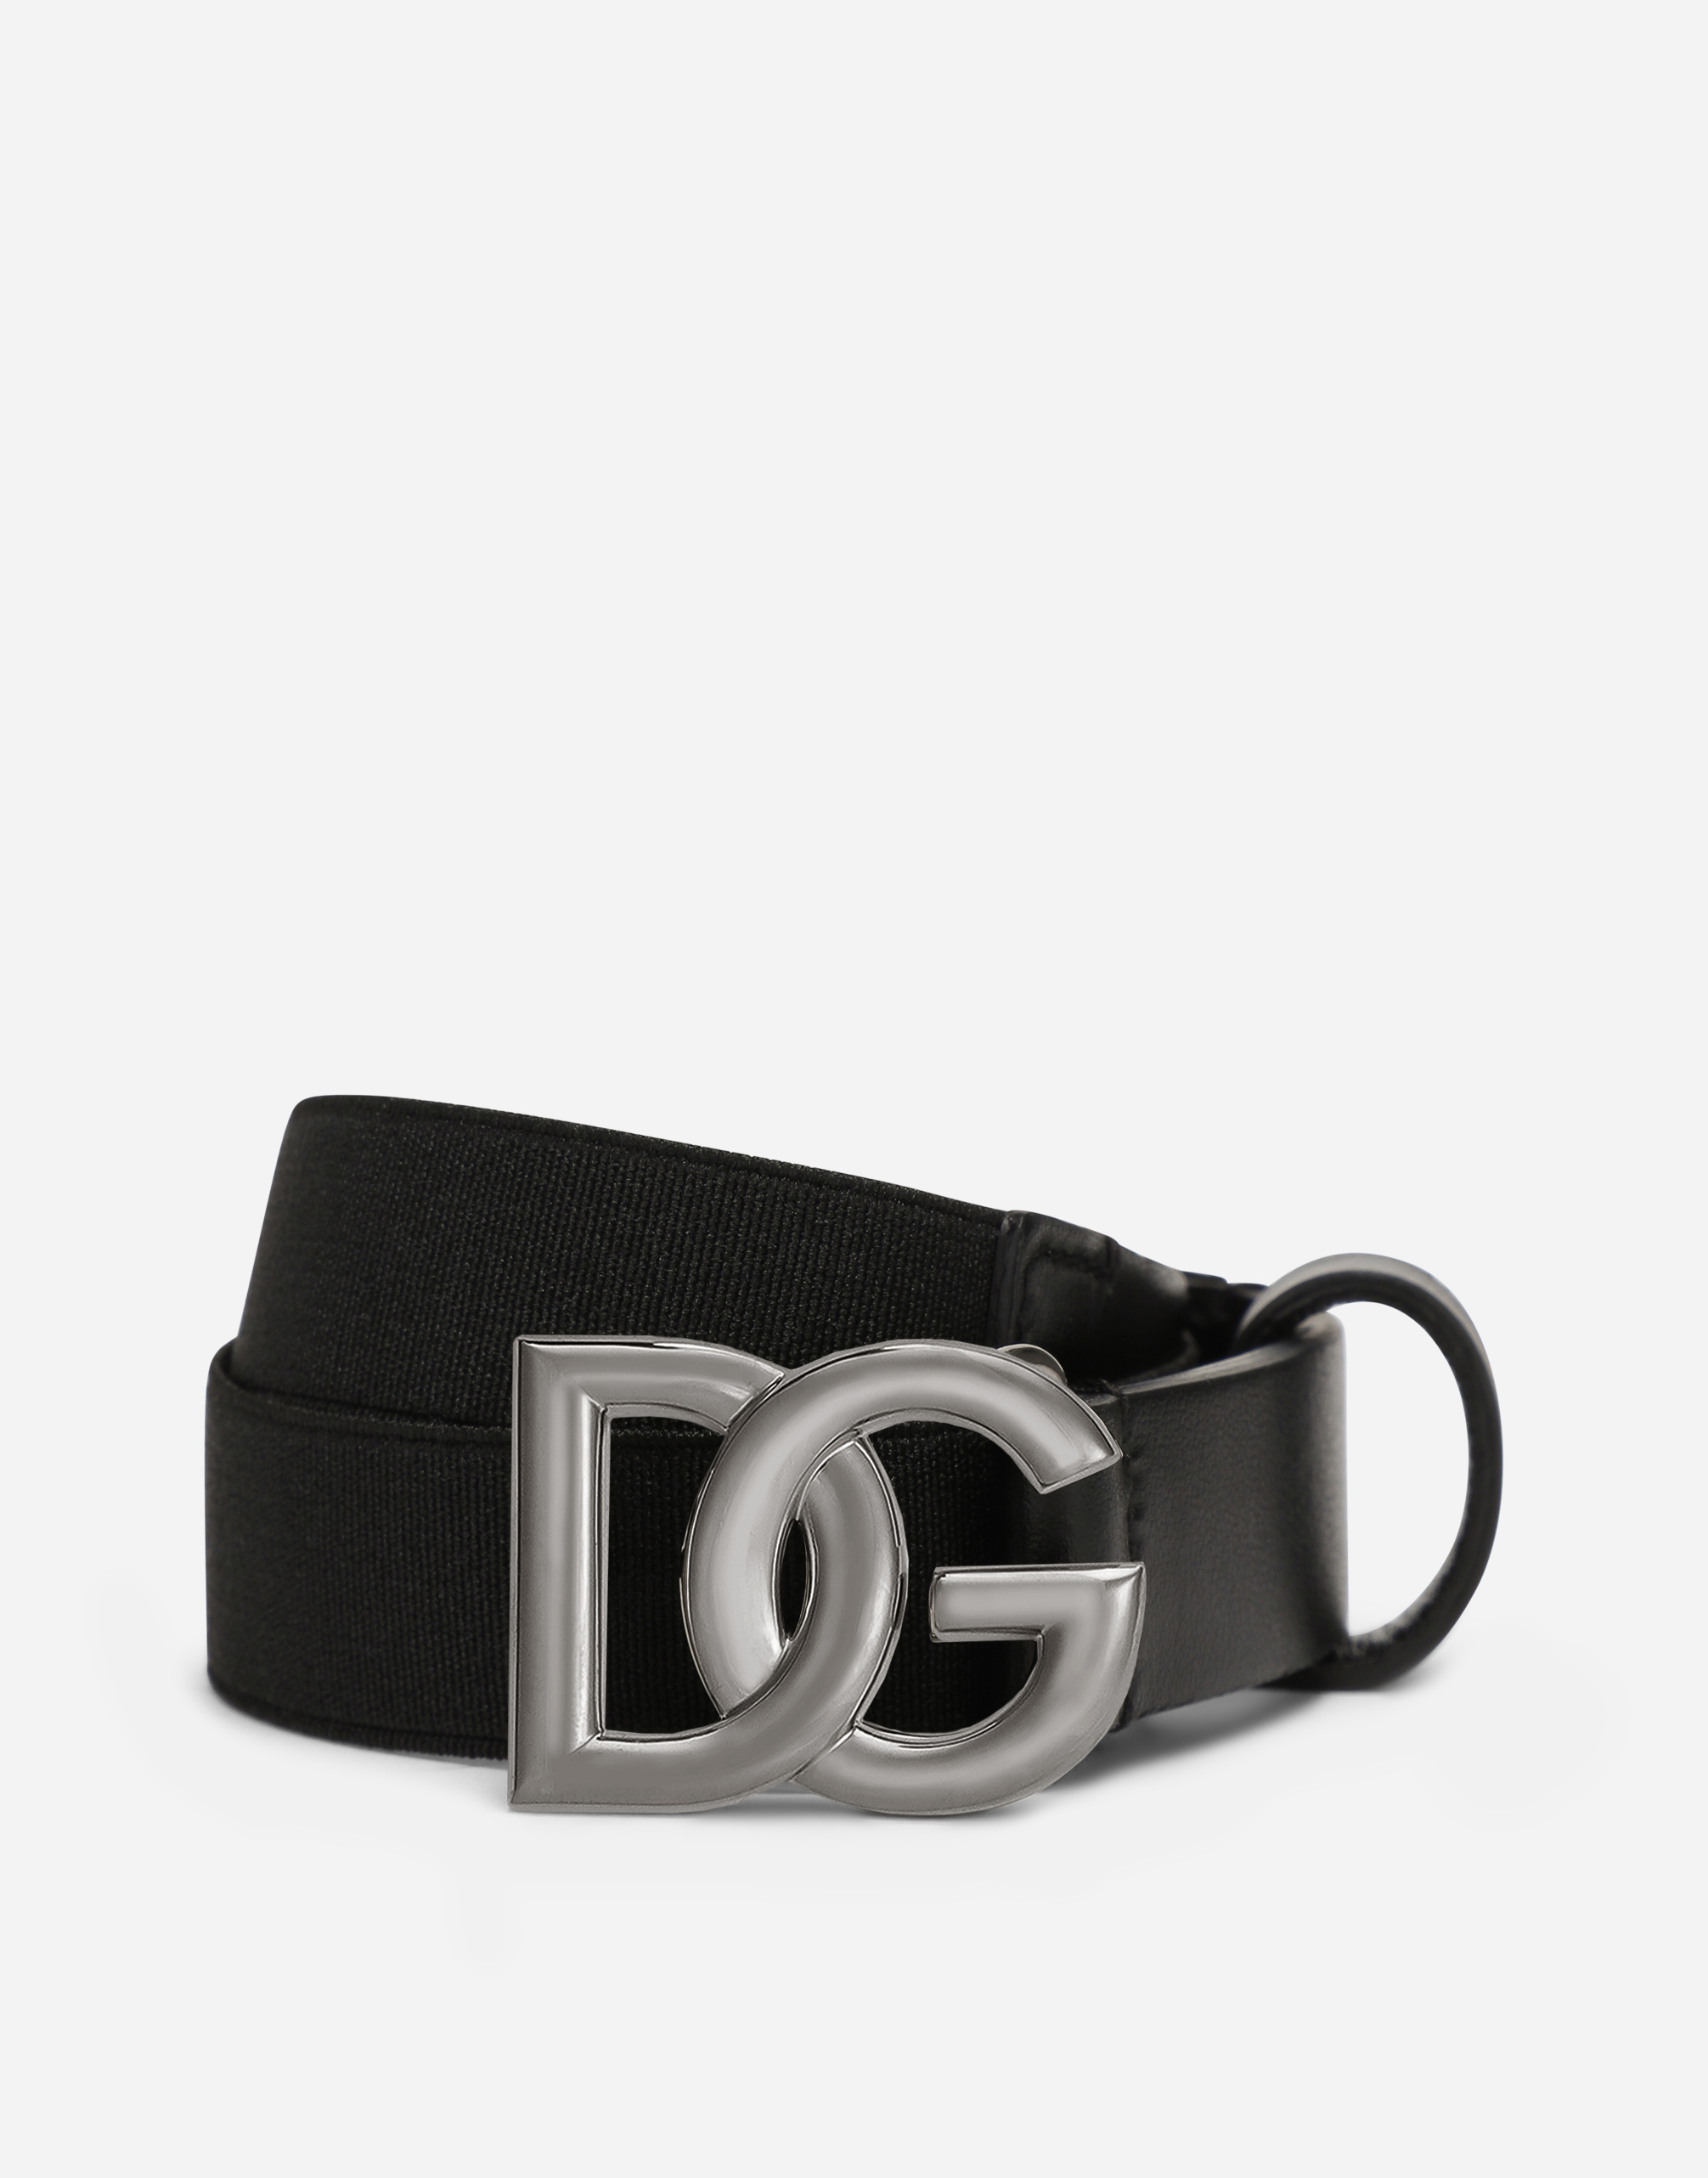 Stretch belt with DG logo in Black